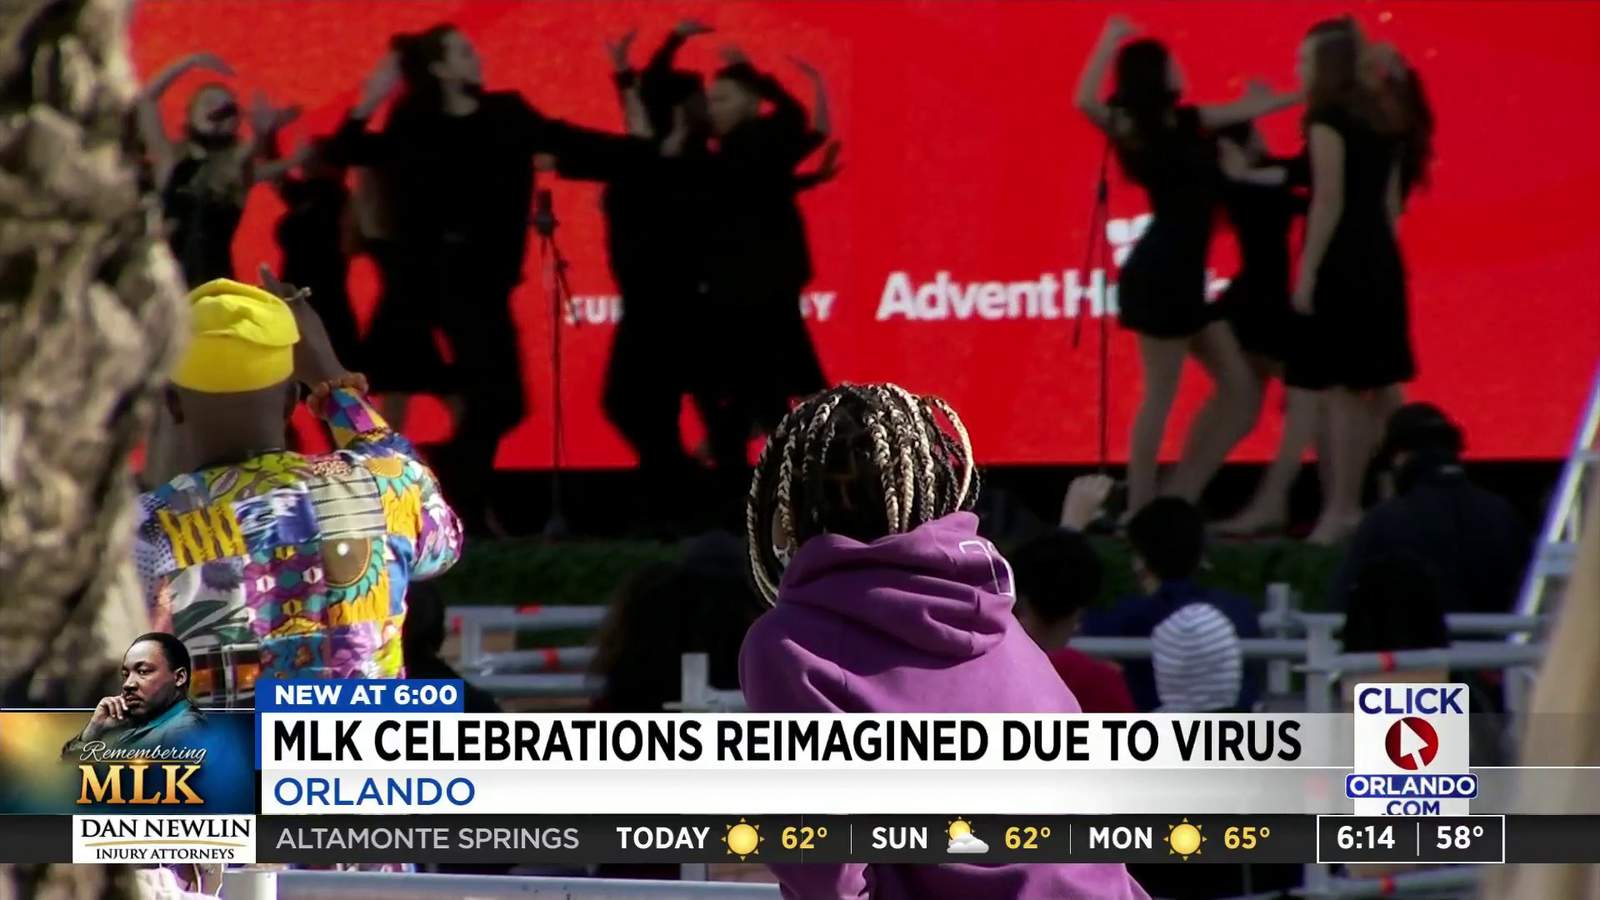 Instead of a parade, Orlando celebrates MLK with holiday showcase